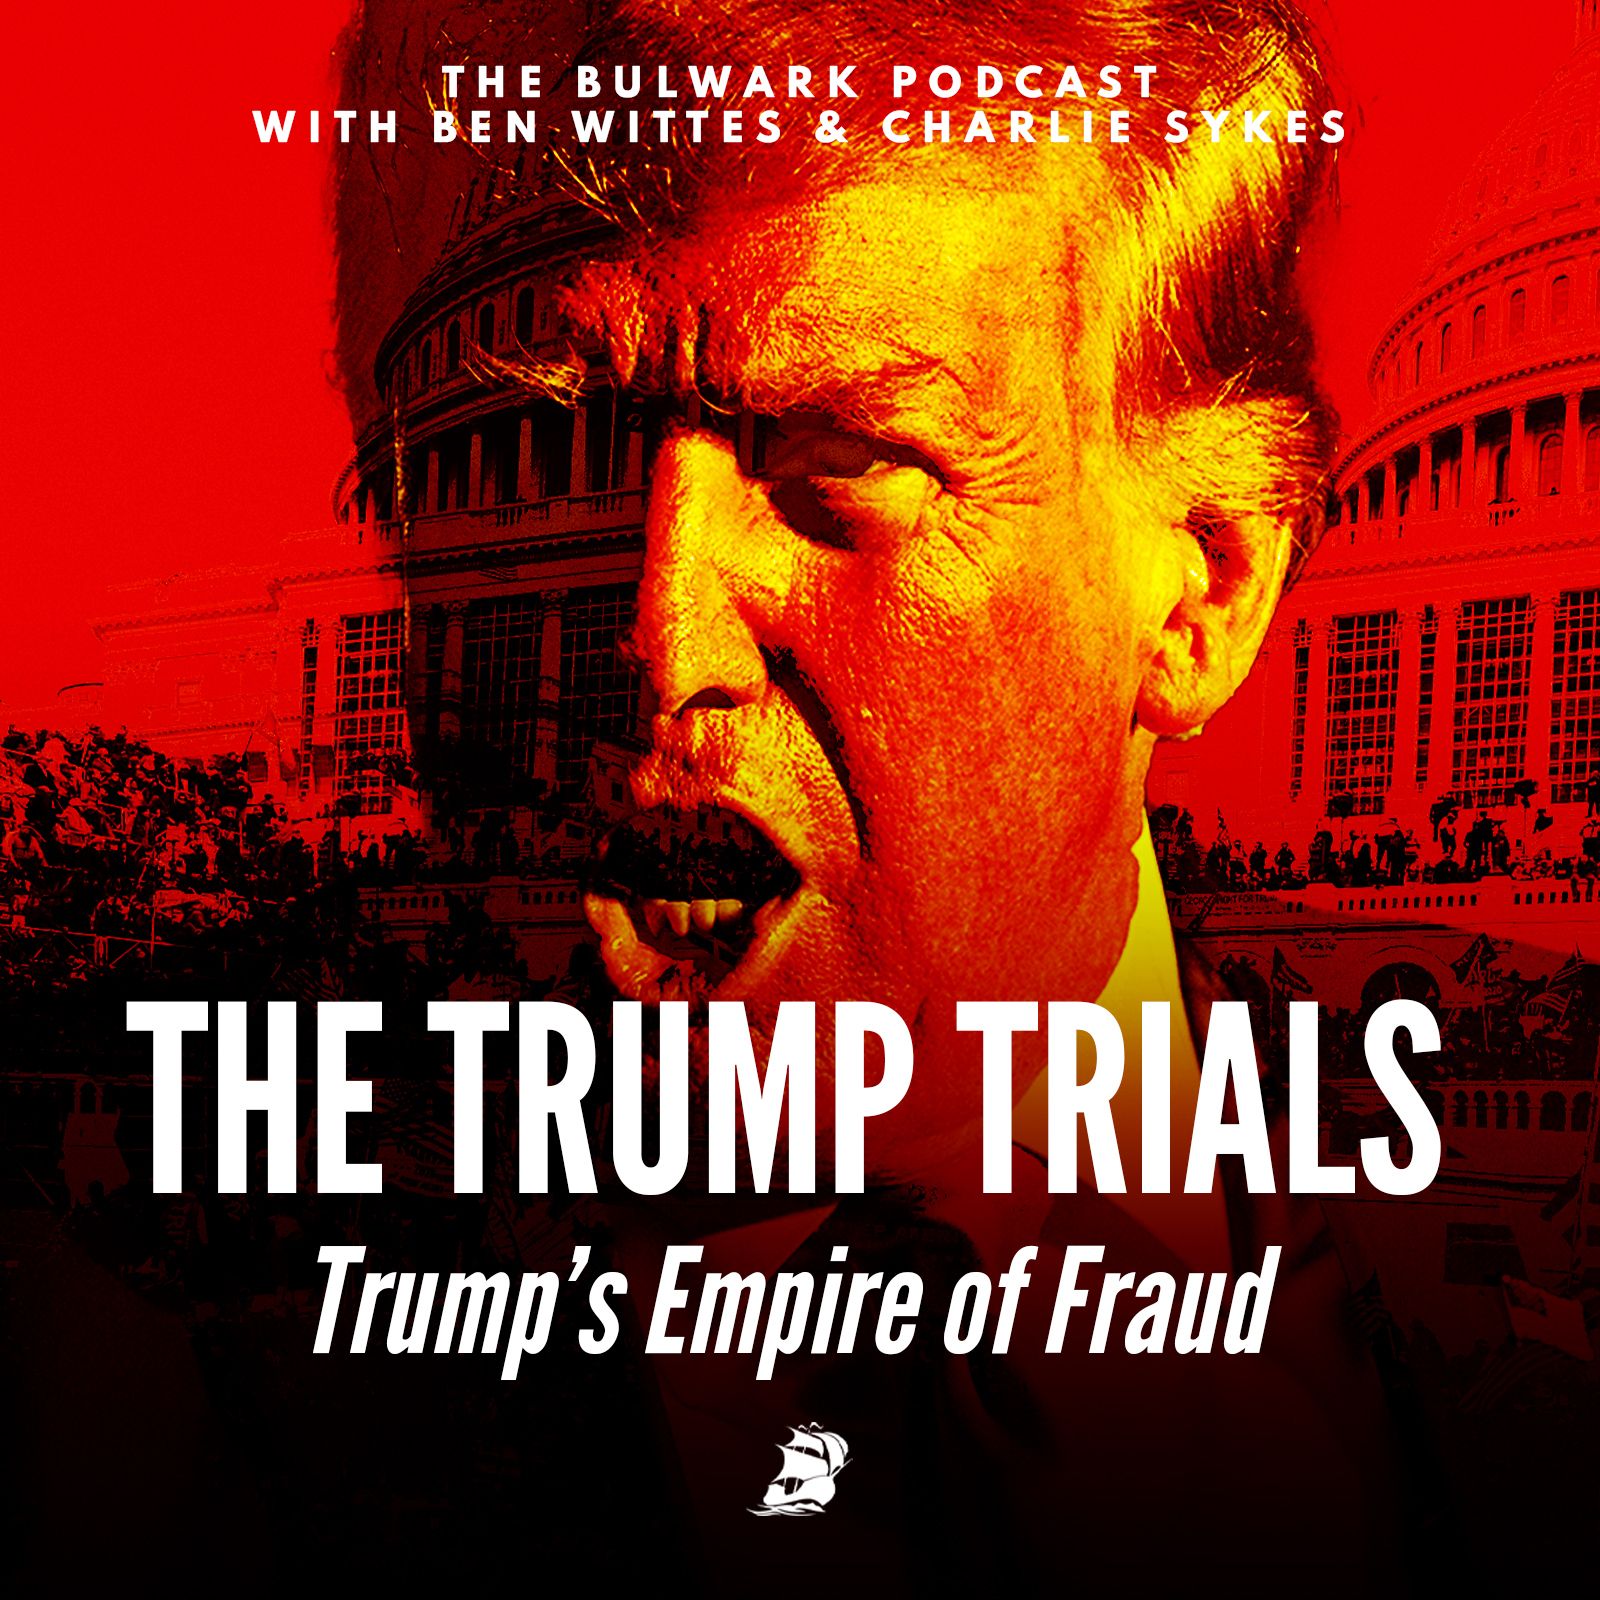 Trump’s Empire of Fraud by The Bulwark Podcast